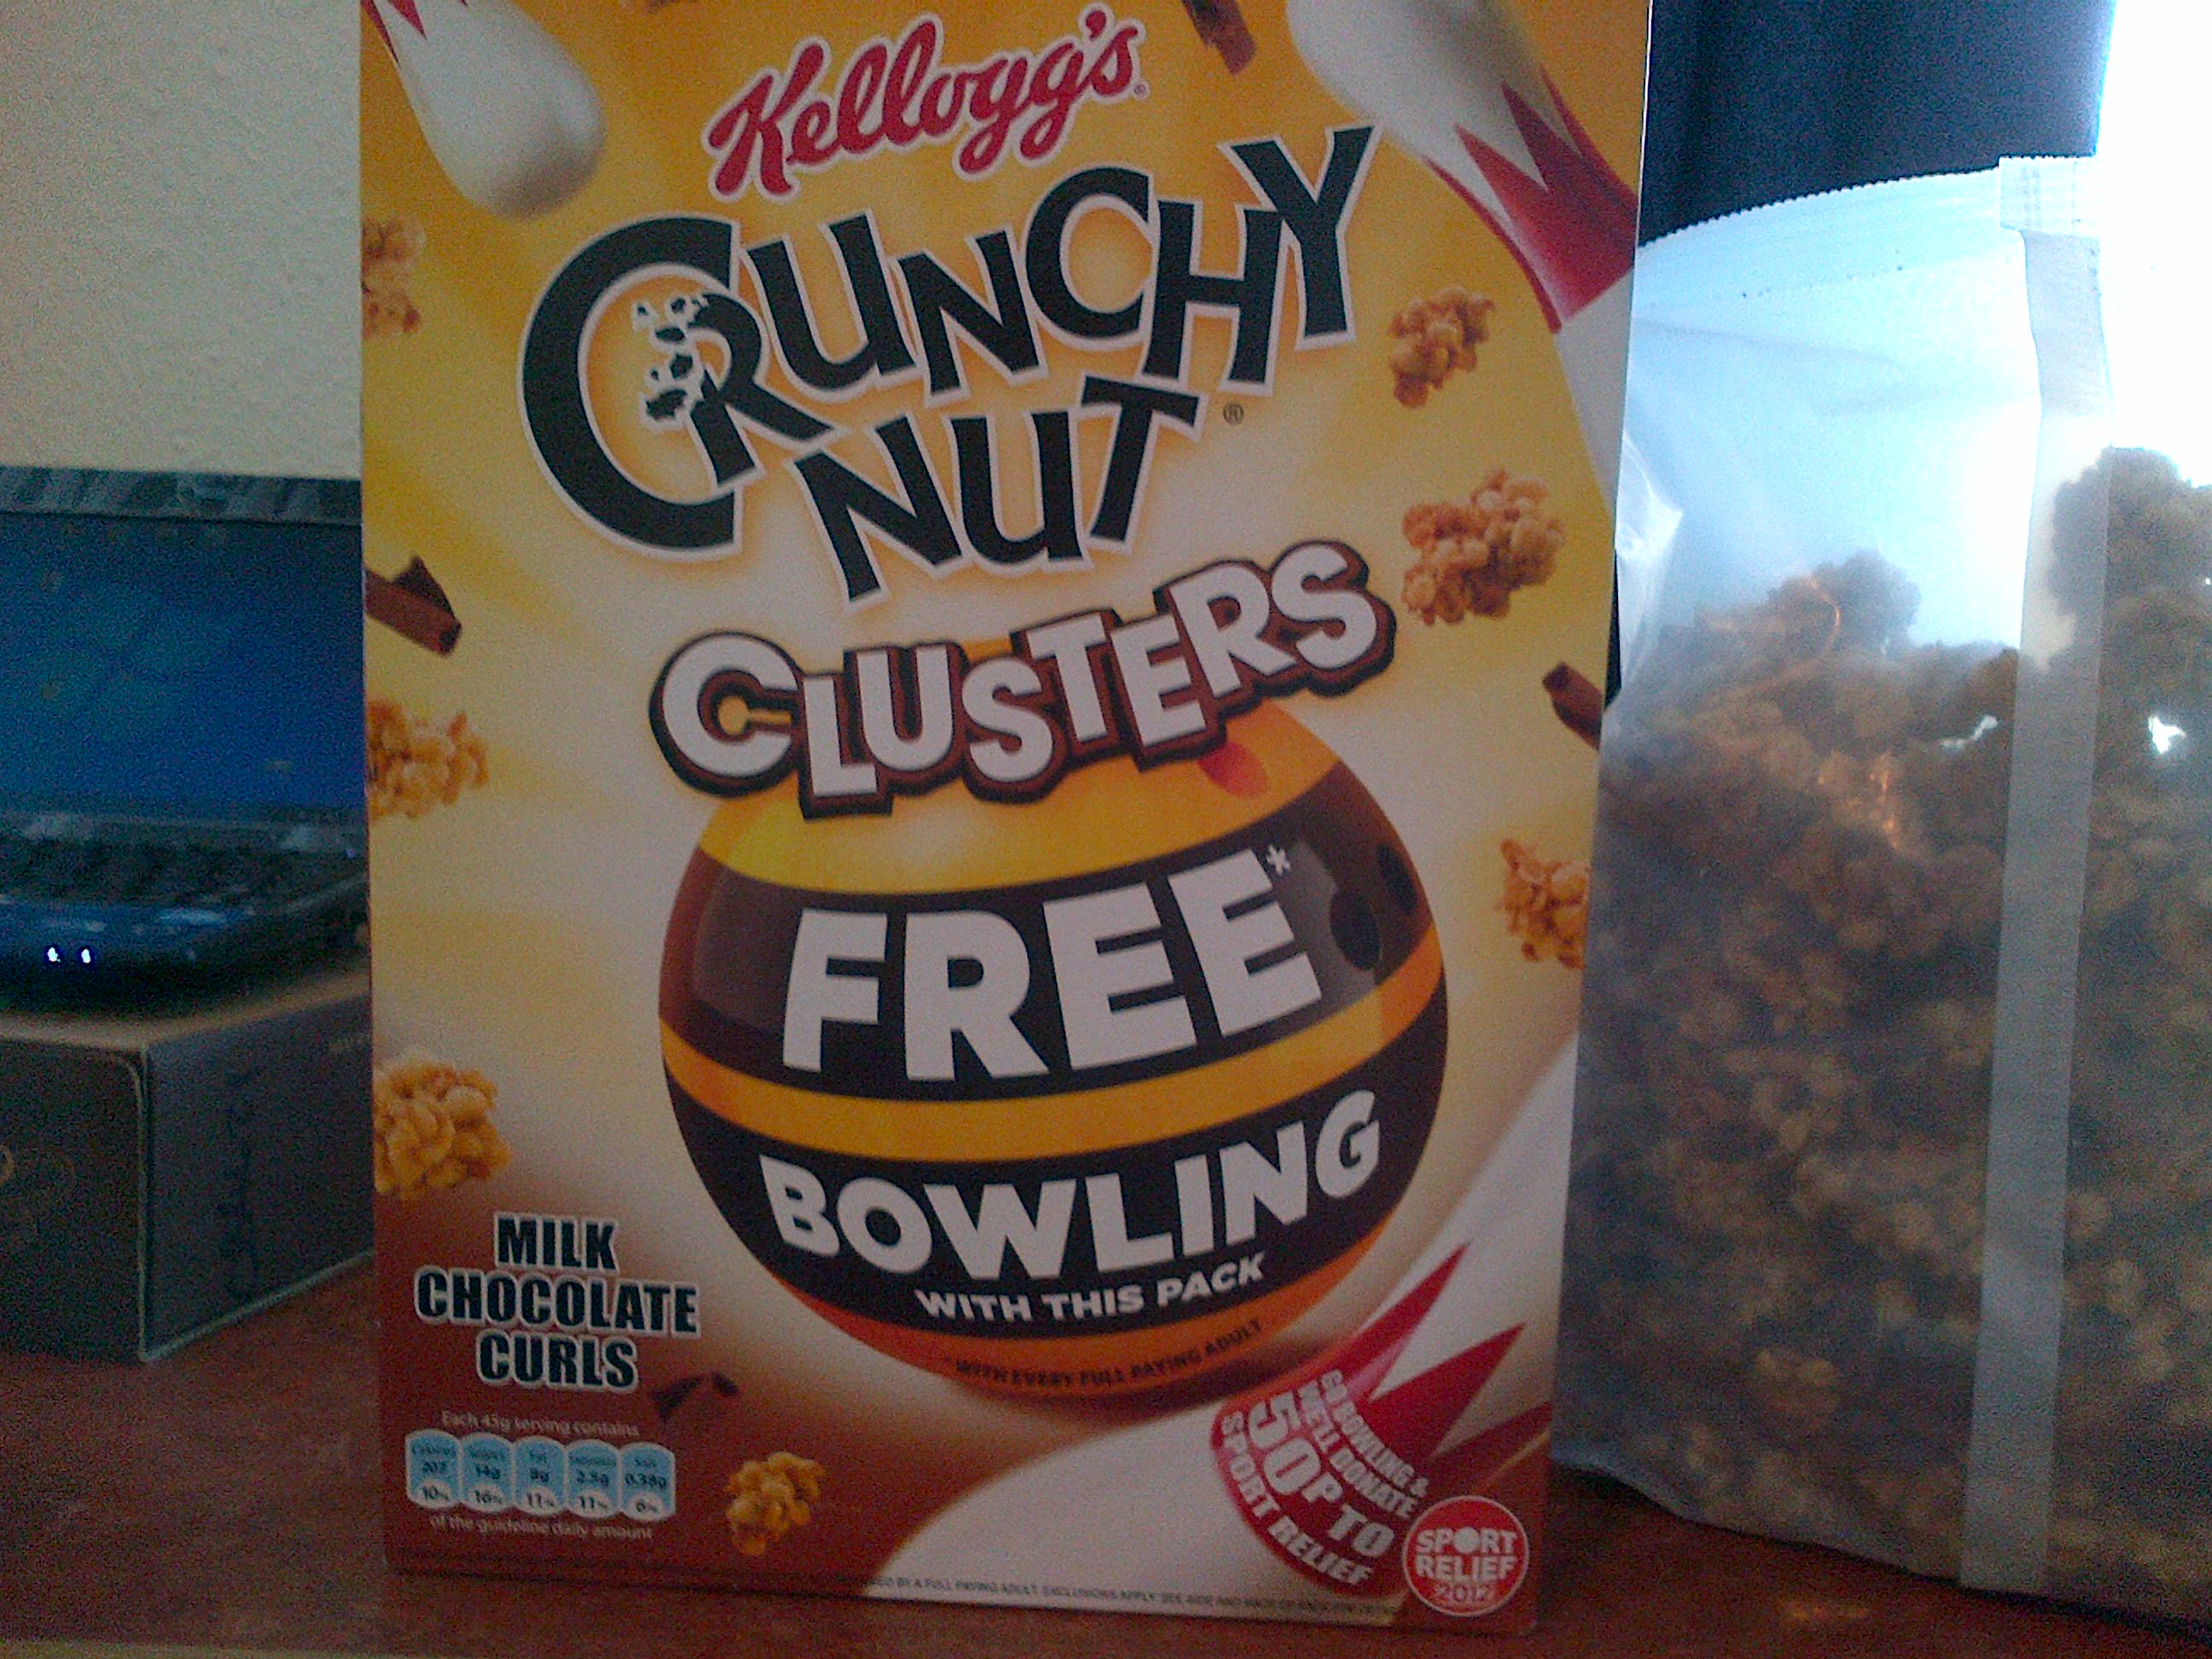 Kellogg's Crunchy Nut Honey & Nut Clusters Breakfast Cereal